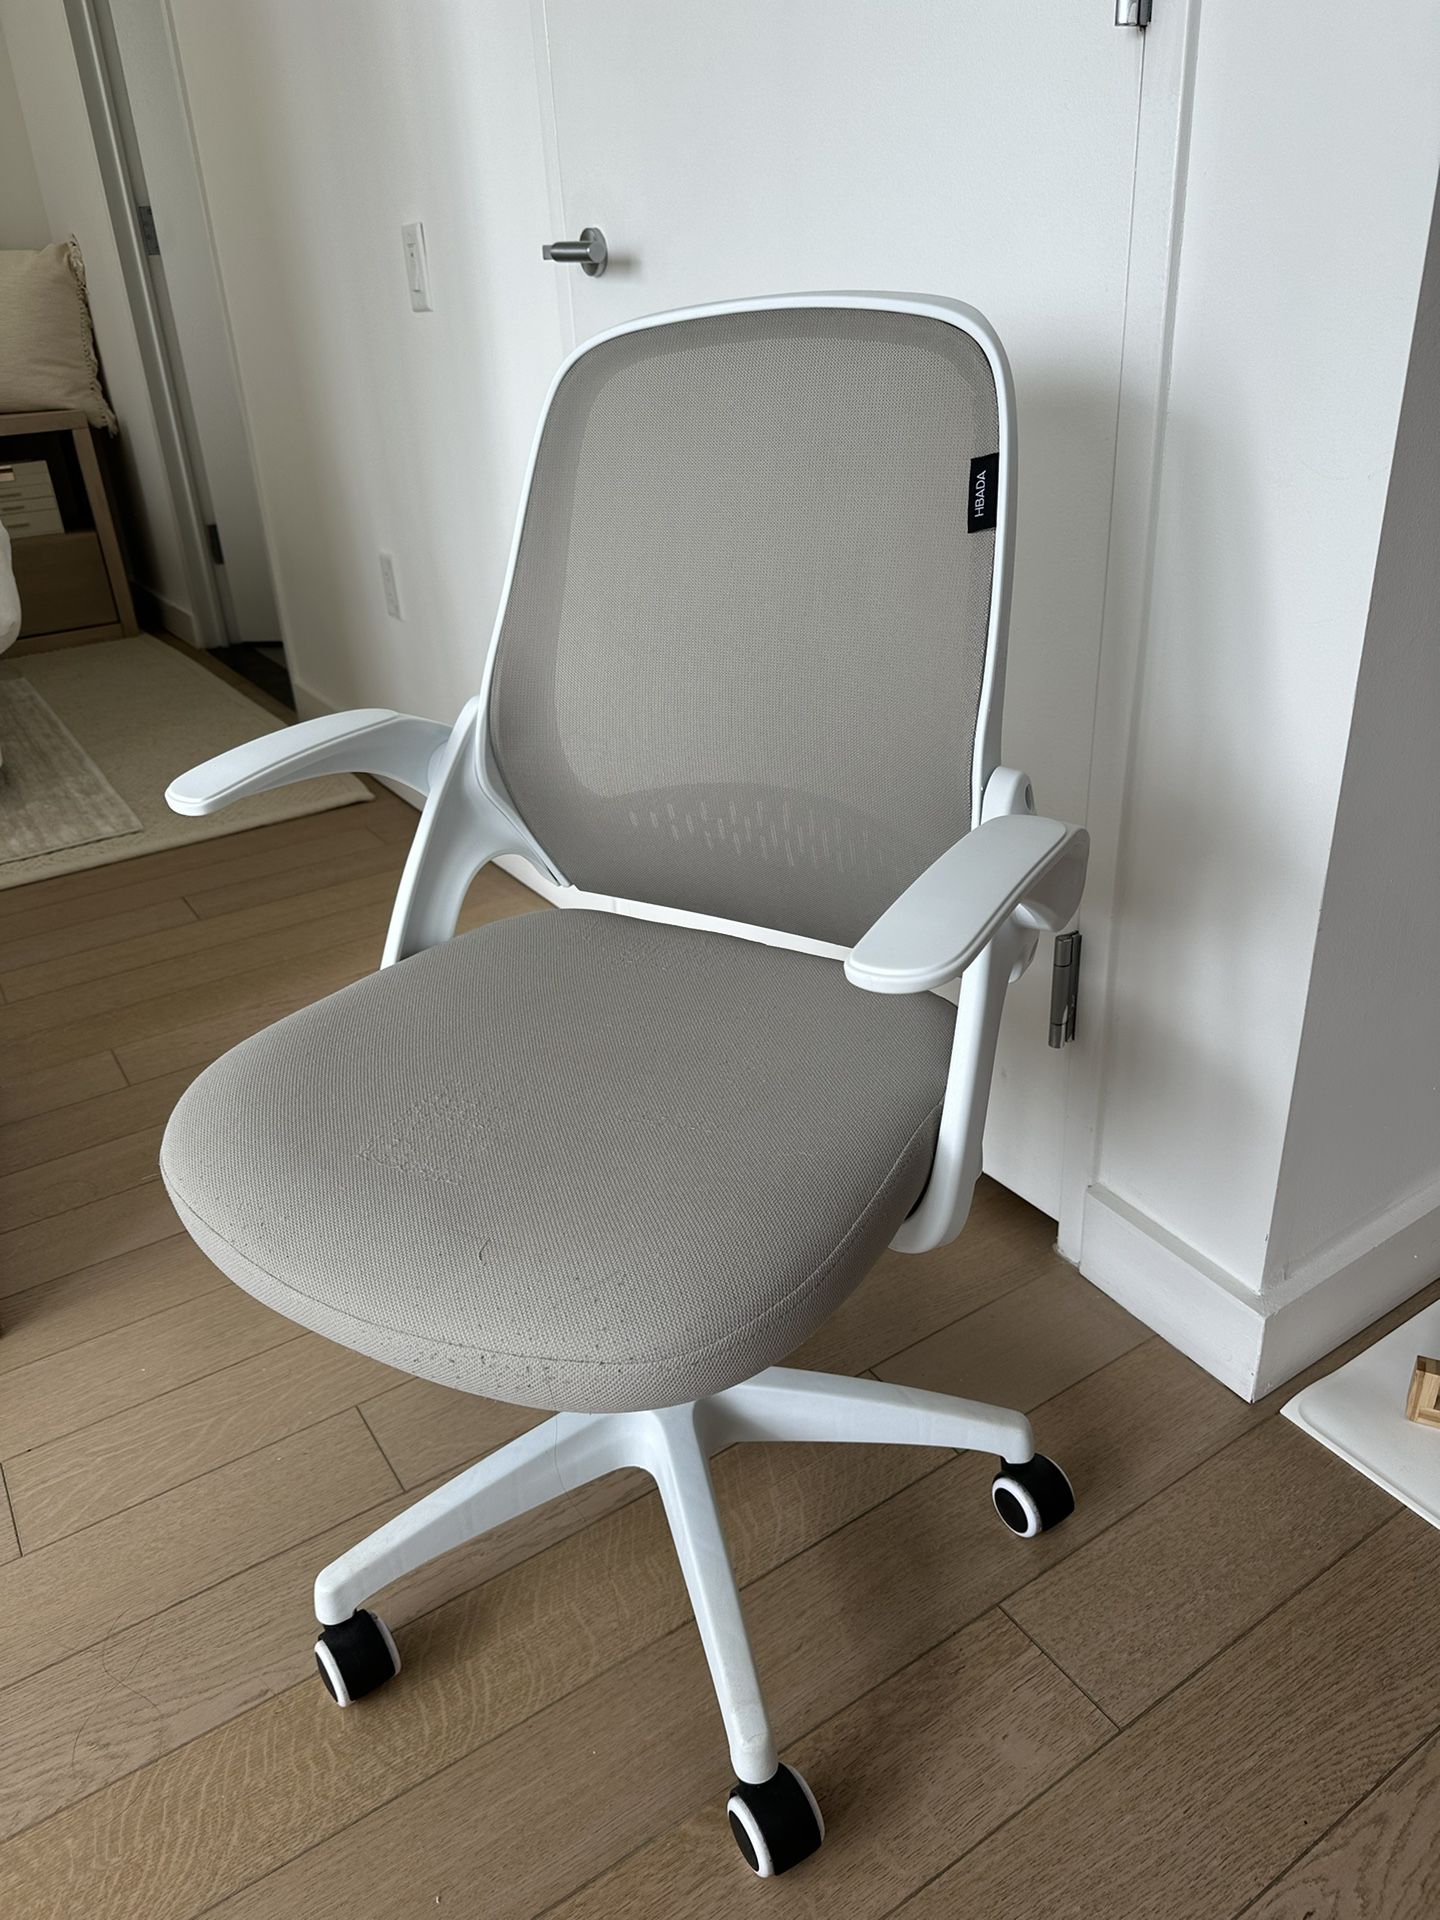 Office Desk Chair